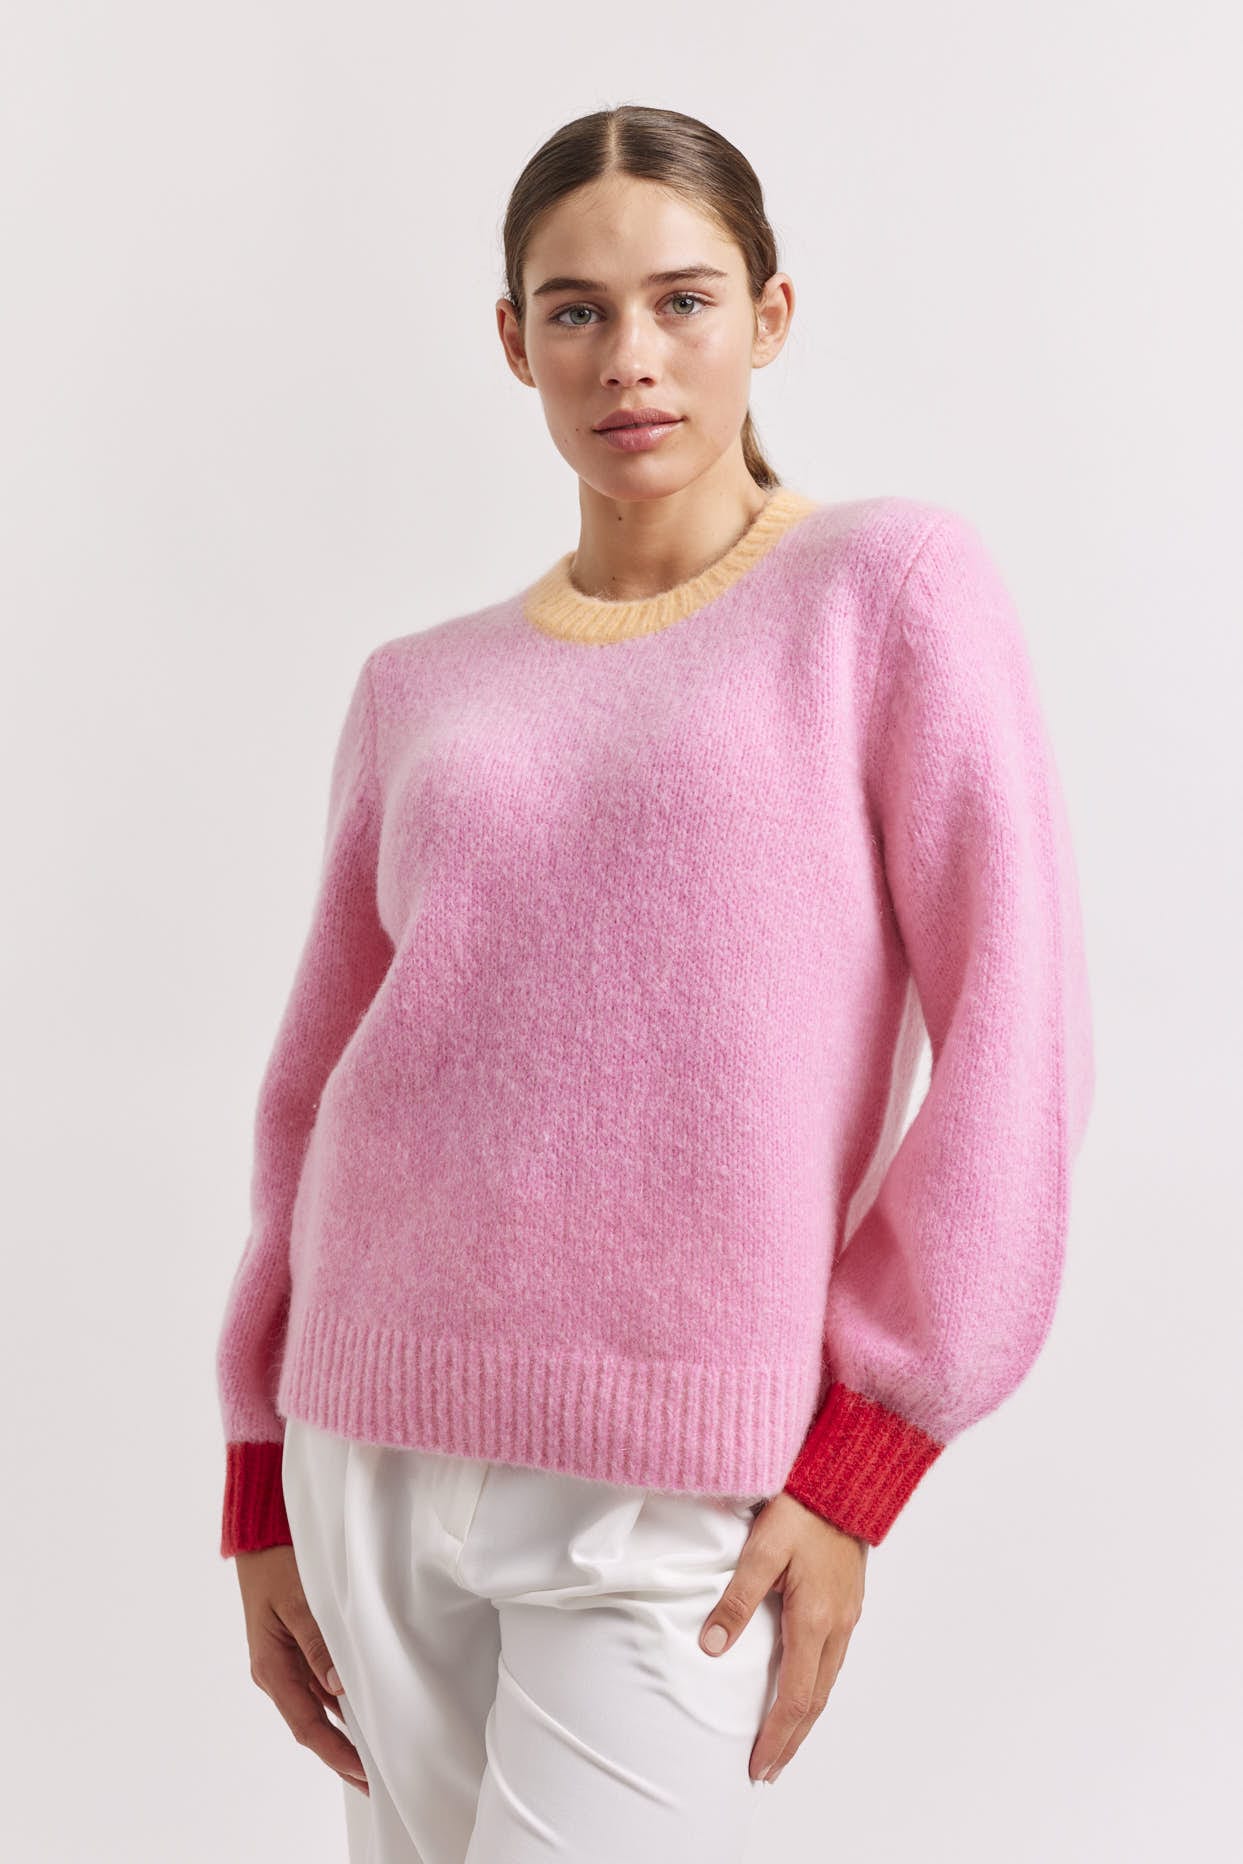 Alessandra Kingston Sweater